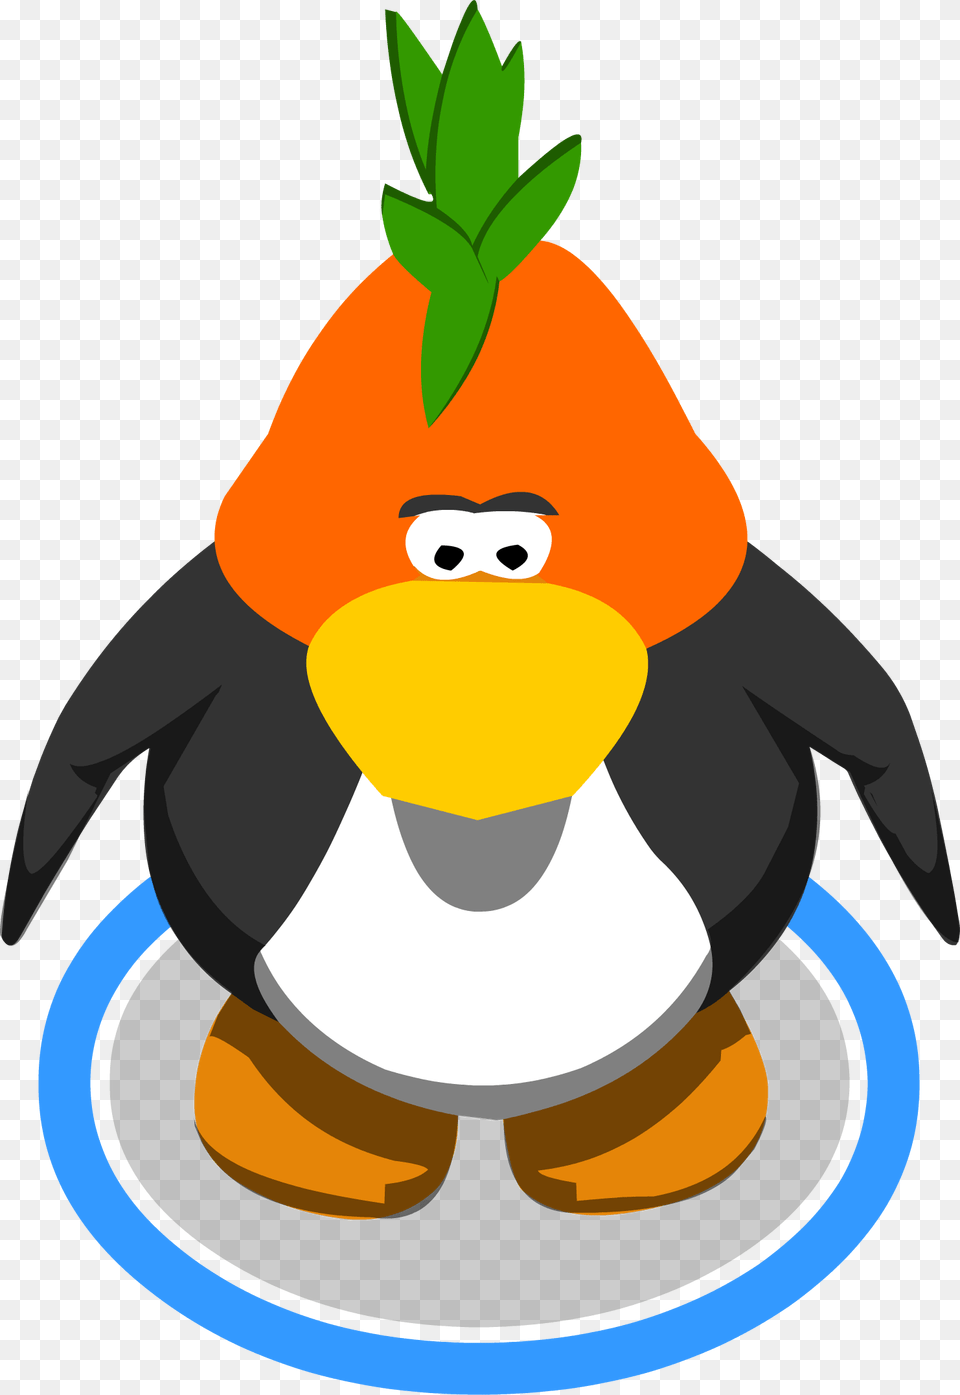 Bird Mascot Head In Game Club Penguin Graduation Cap, Nature, Outdoors, Snow, Snowman Free Png Download